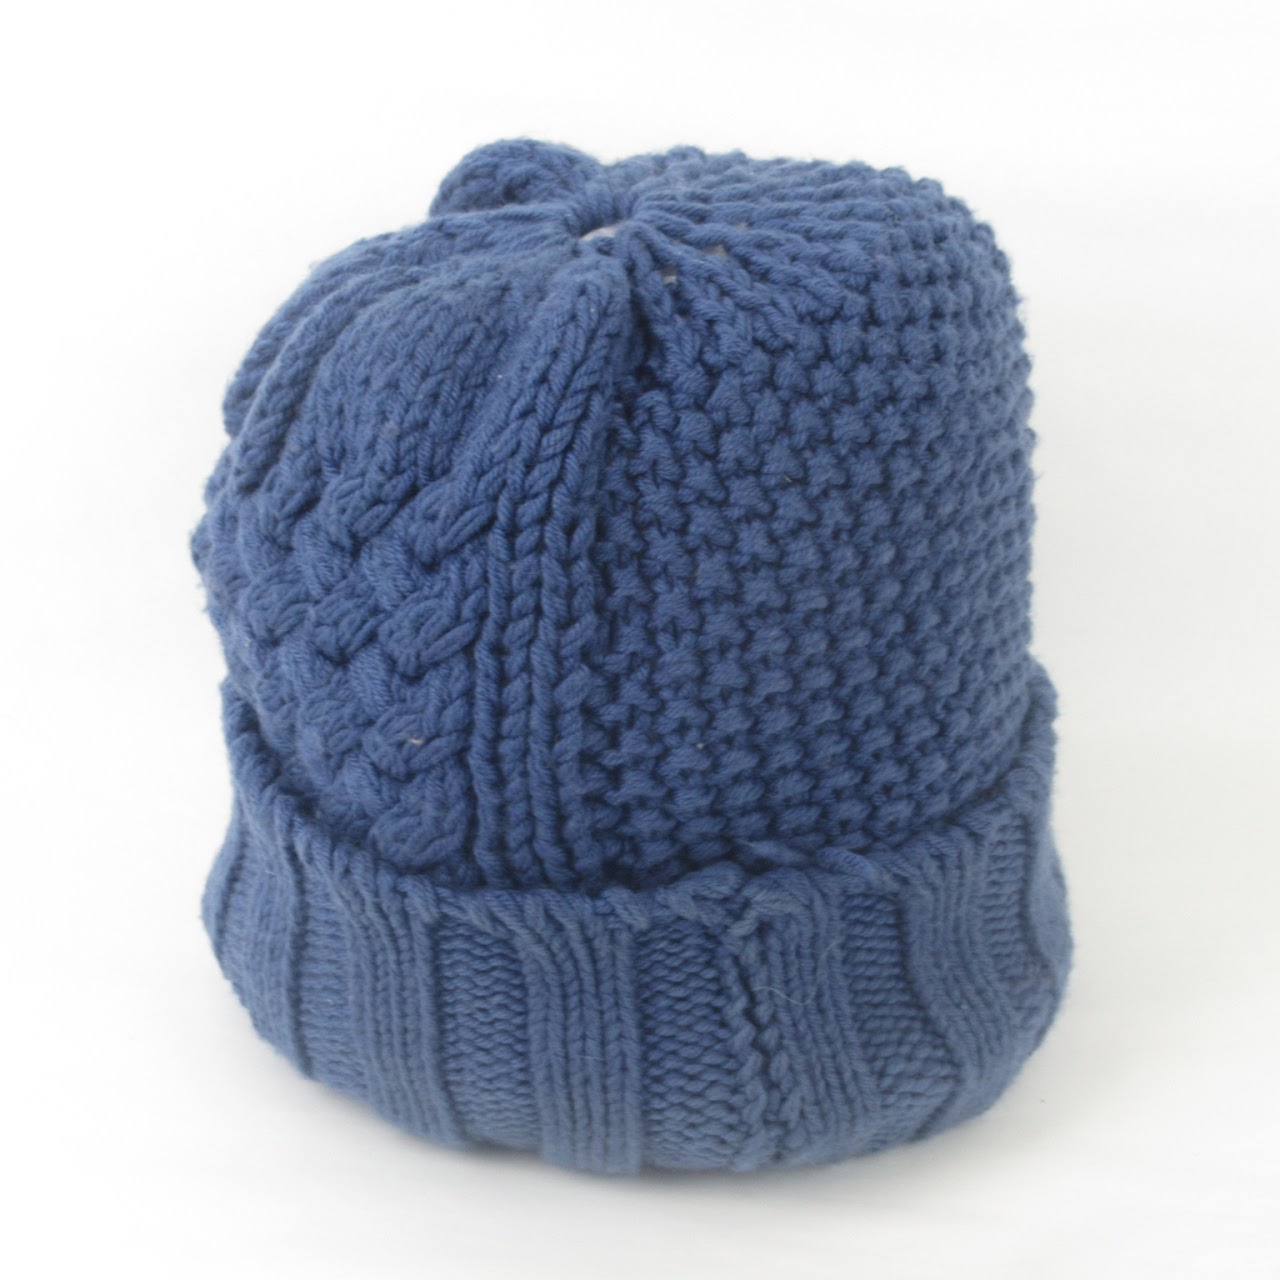 Moncler Cable Knit Winter Hat